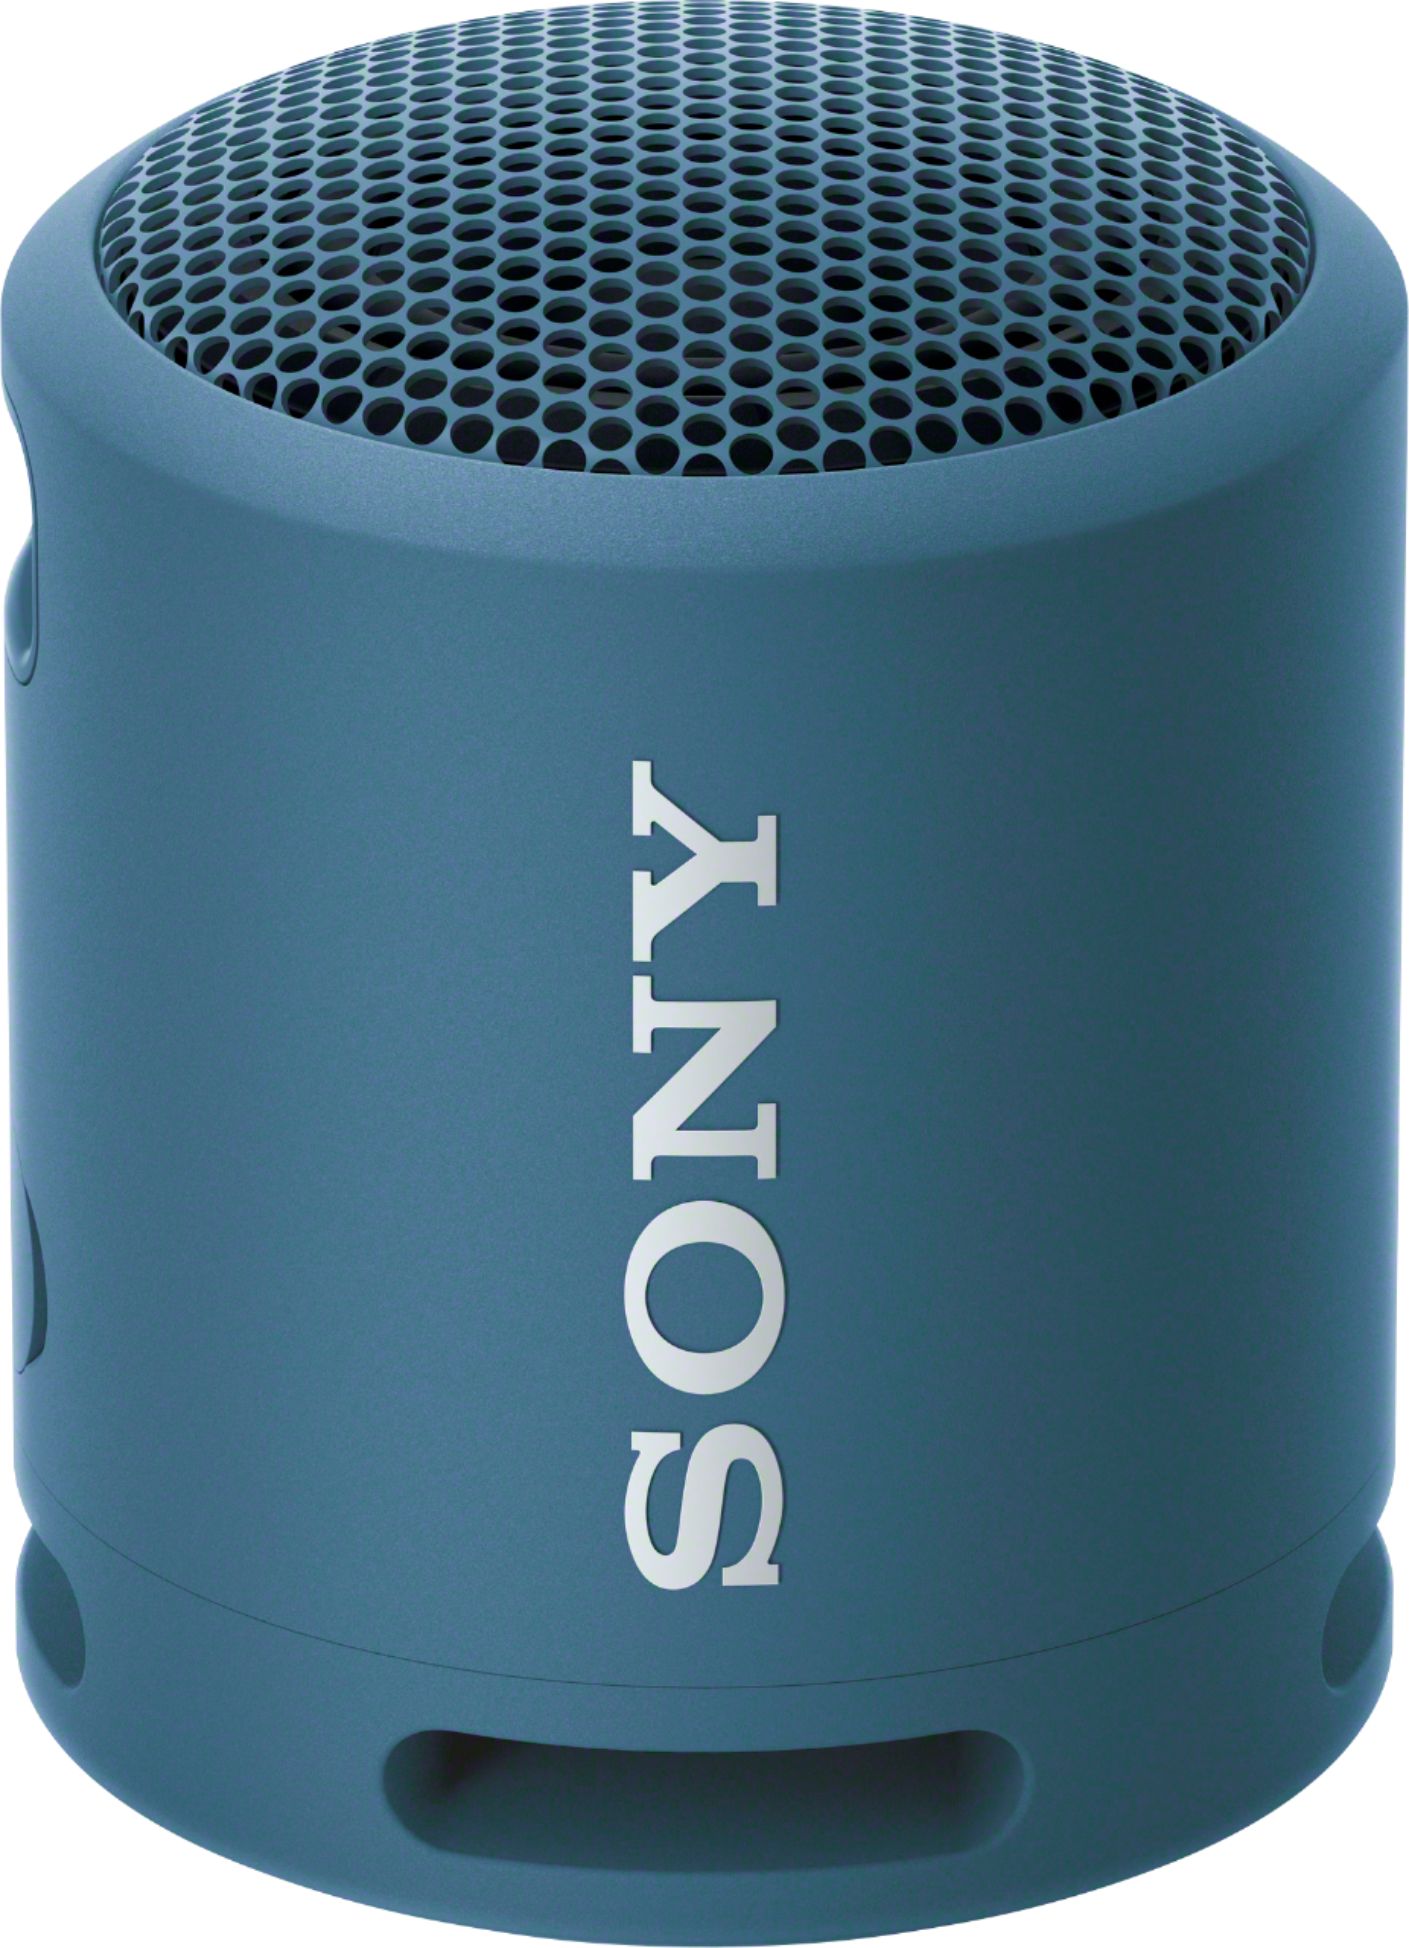 acid moustache tight Sony EXTRA BASS Compact Portable Bluetooth Speaker Light Blue SRSXB13/L -  Best Buy